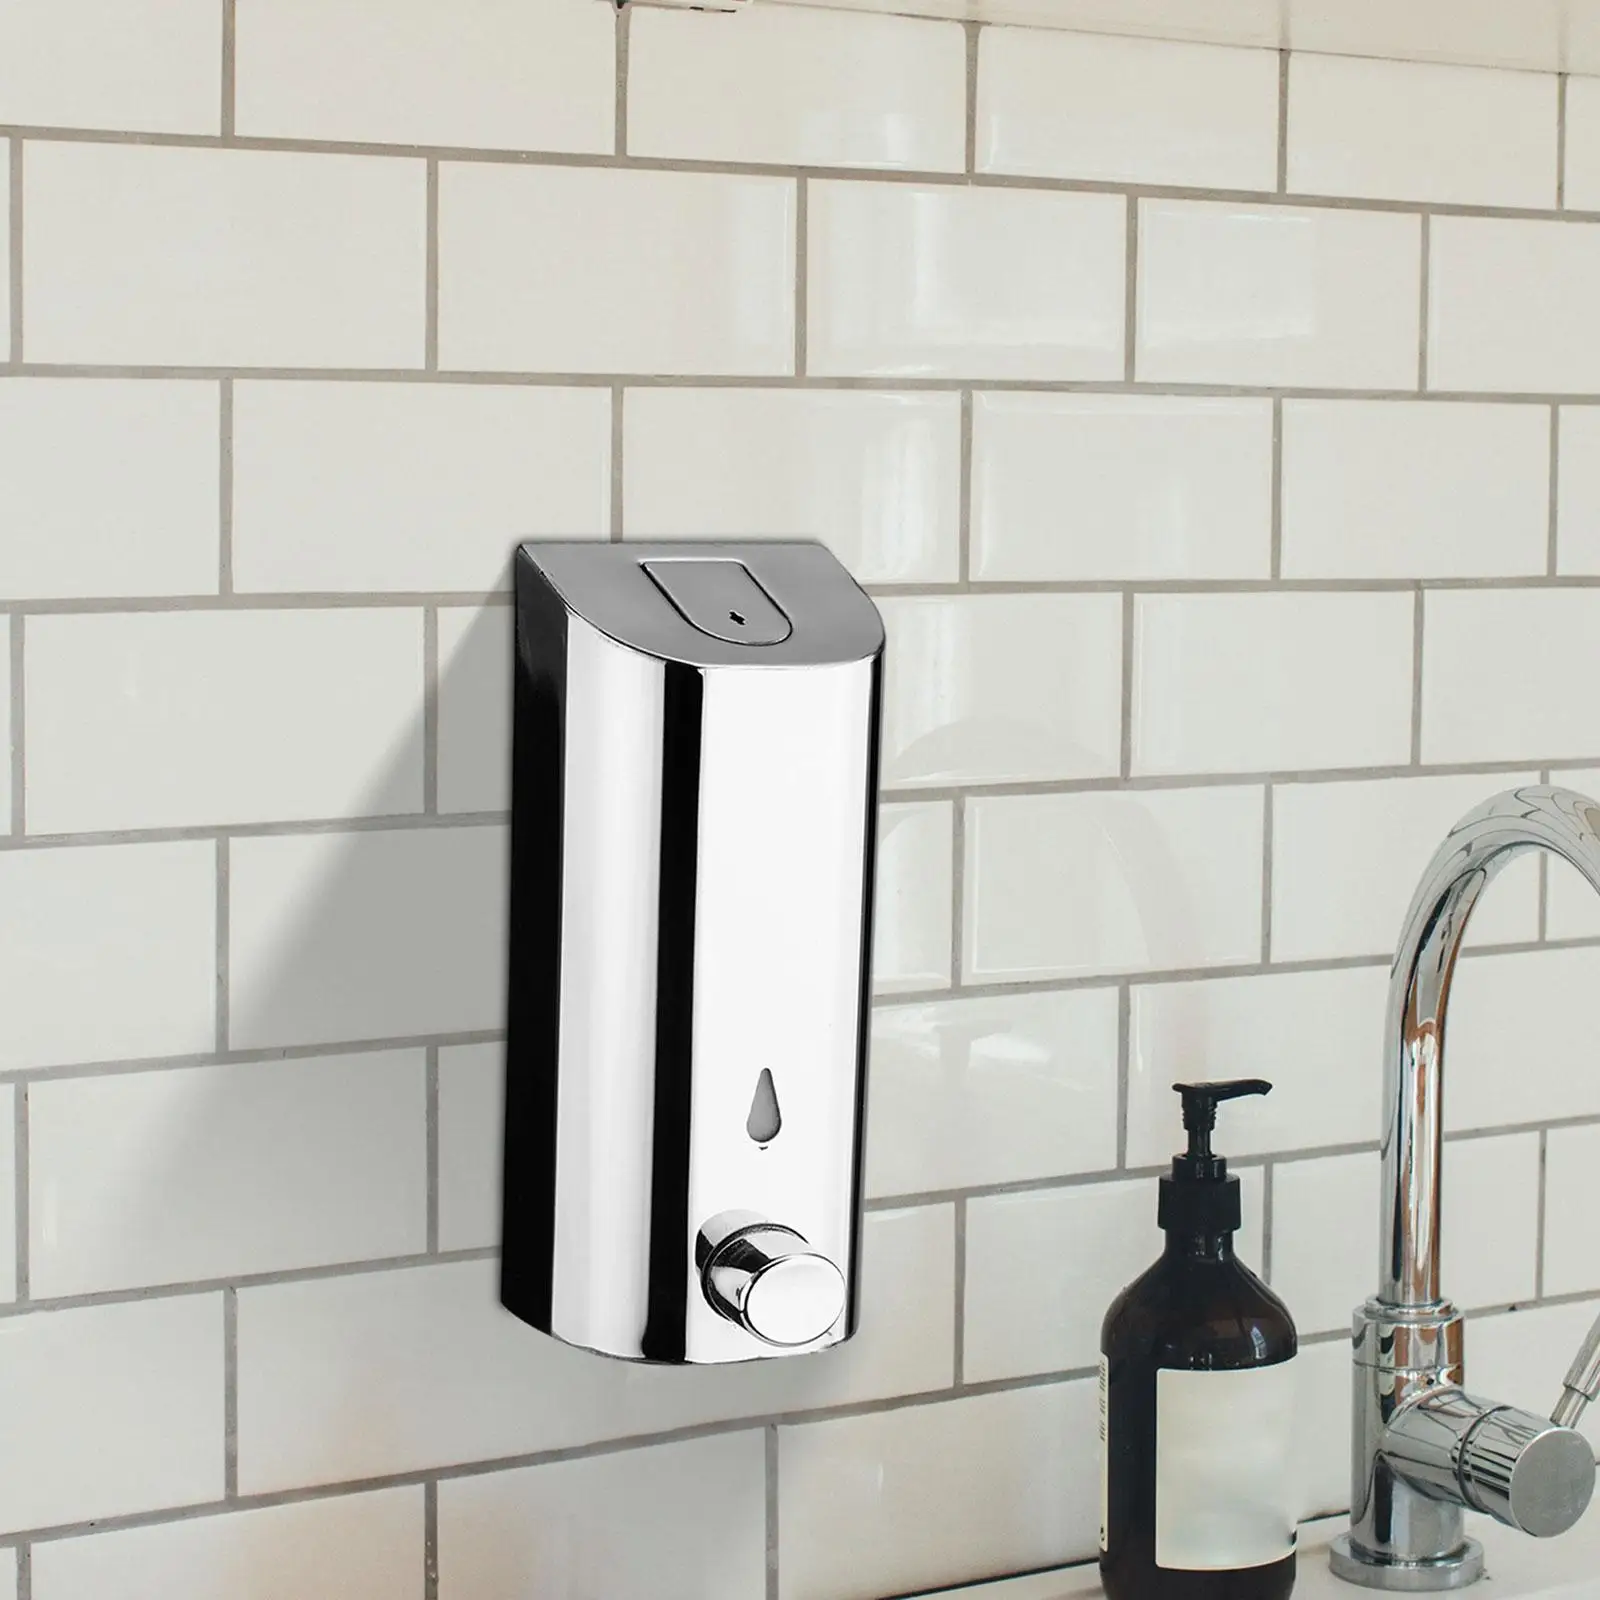 Wall Mounted Shampoo Dispenser Multipurpose Body Wash Dispenser Shower Soap Dispenser for Kitchens Restroom Airports Bank Hotels